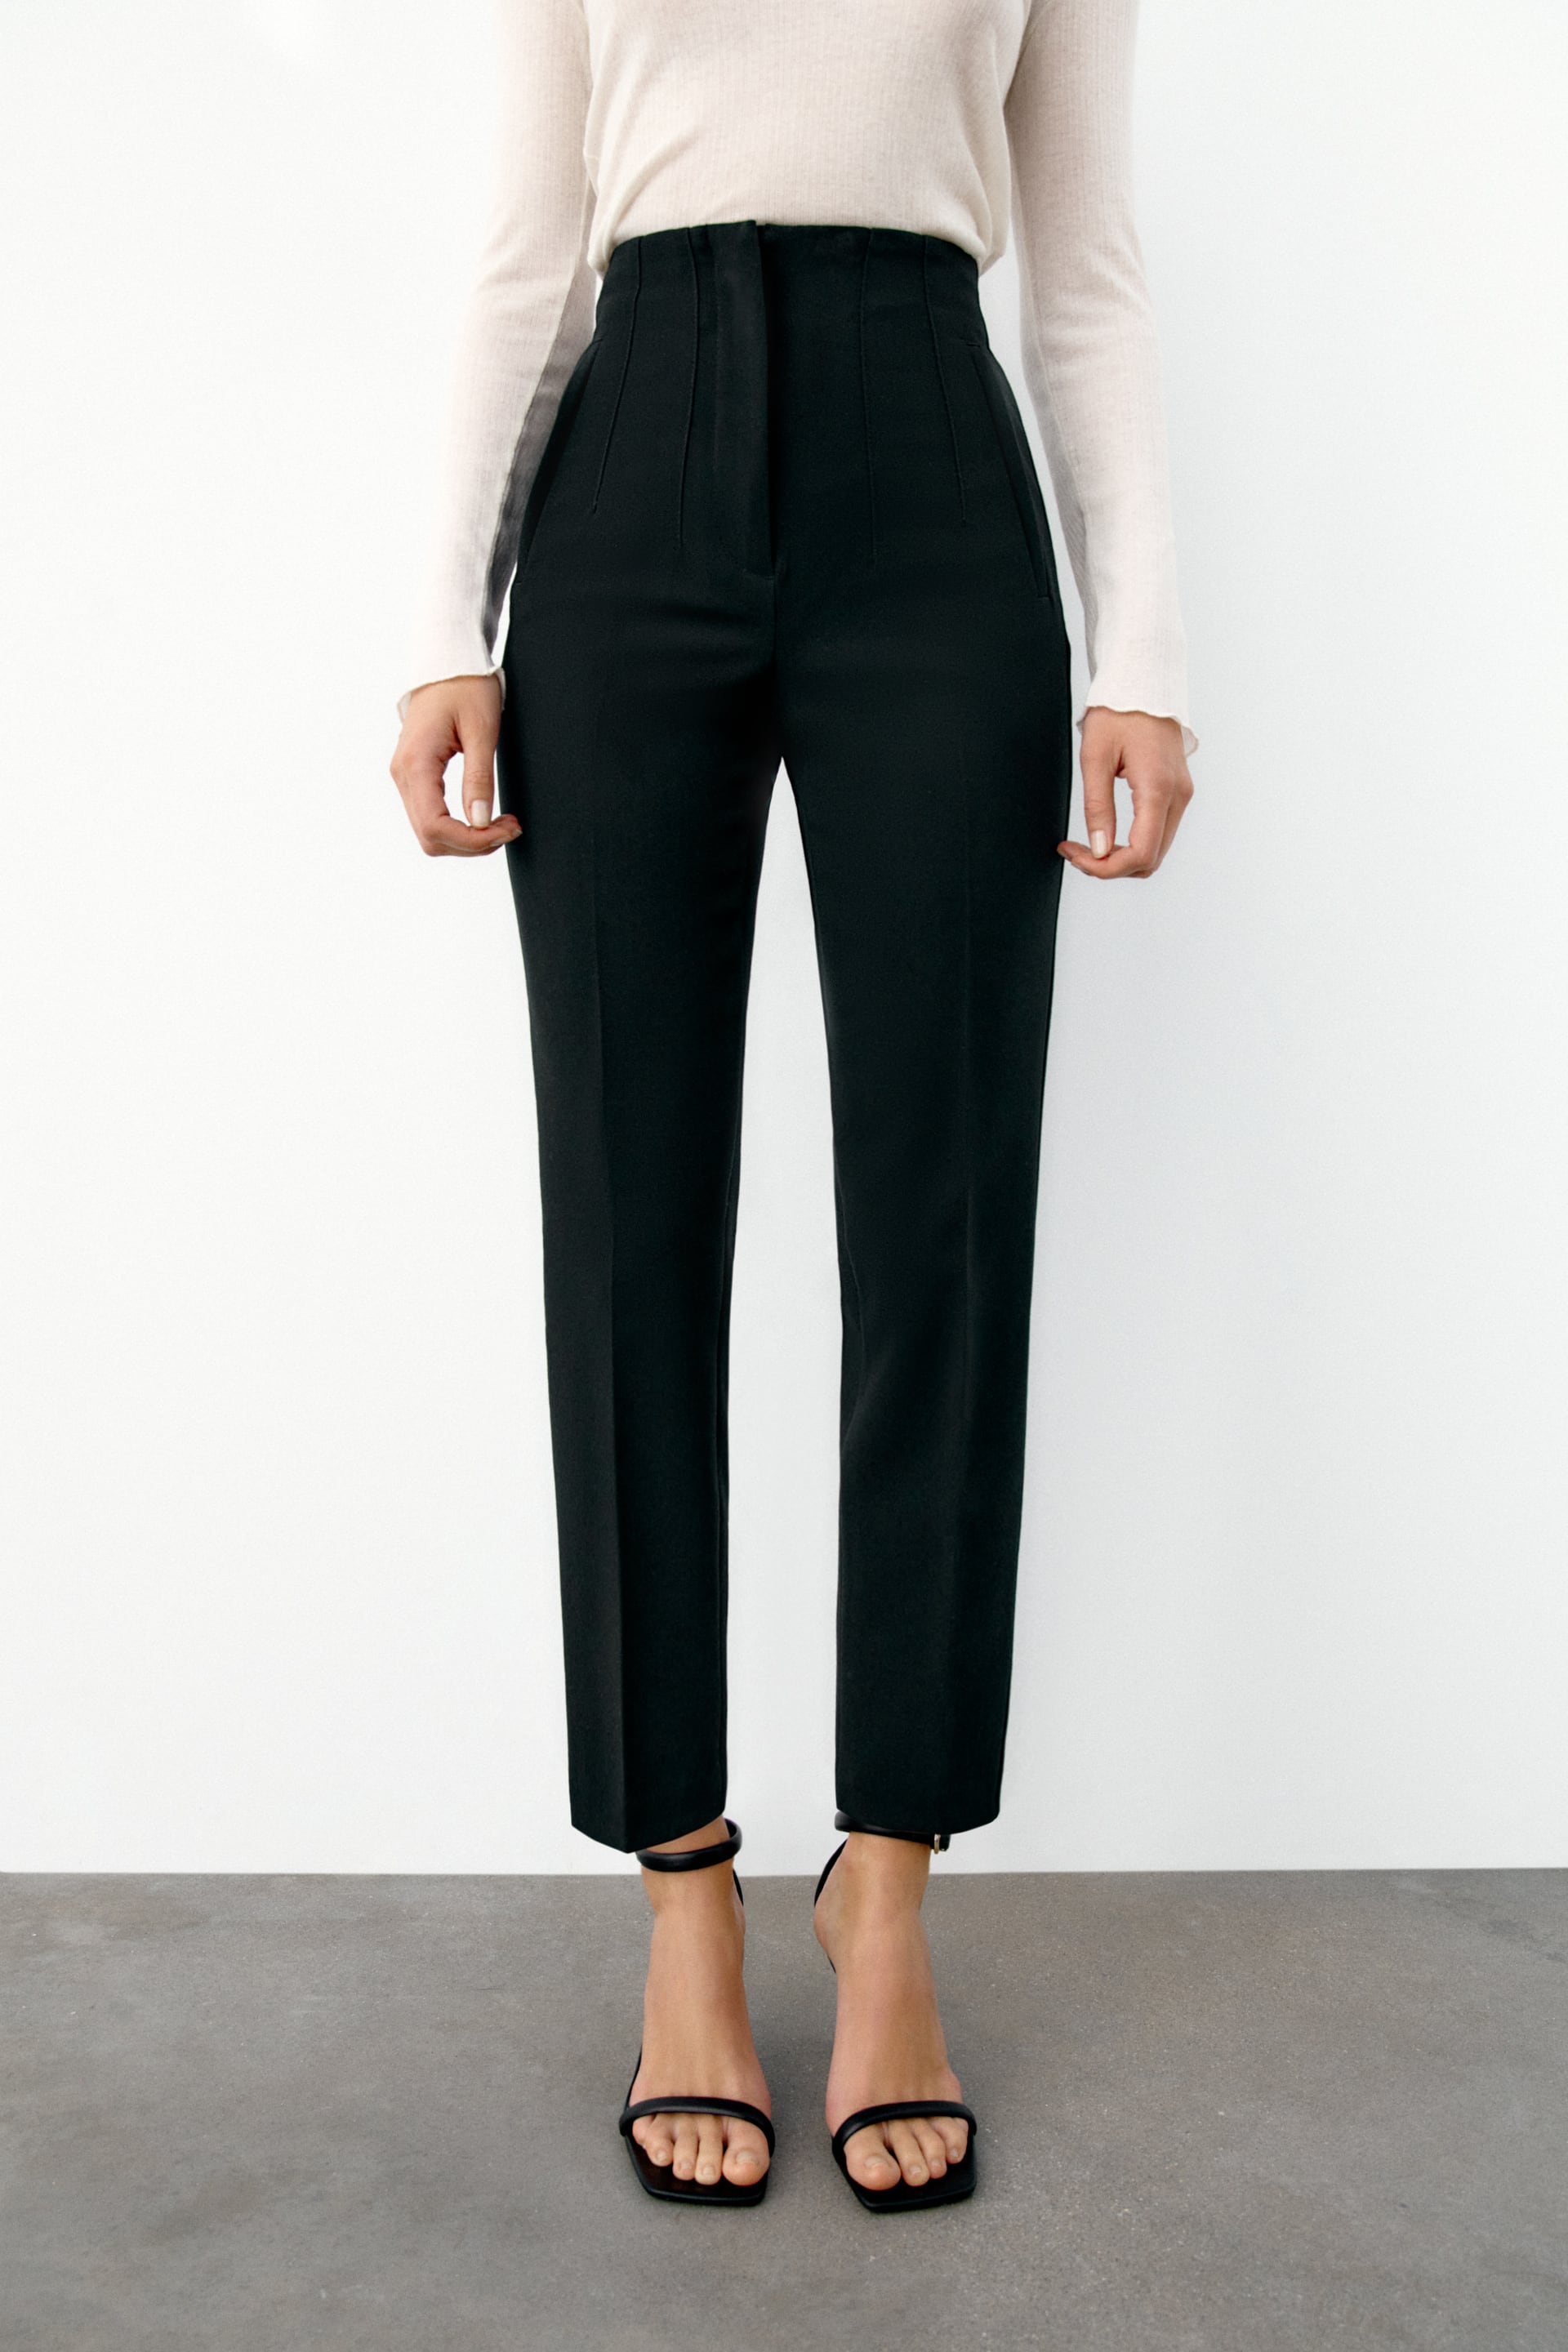 Zara black high-waisted trousers